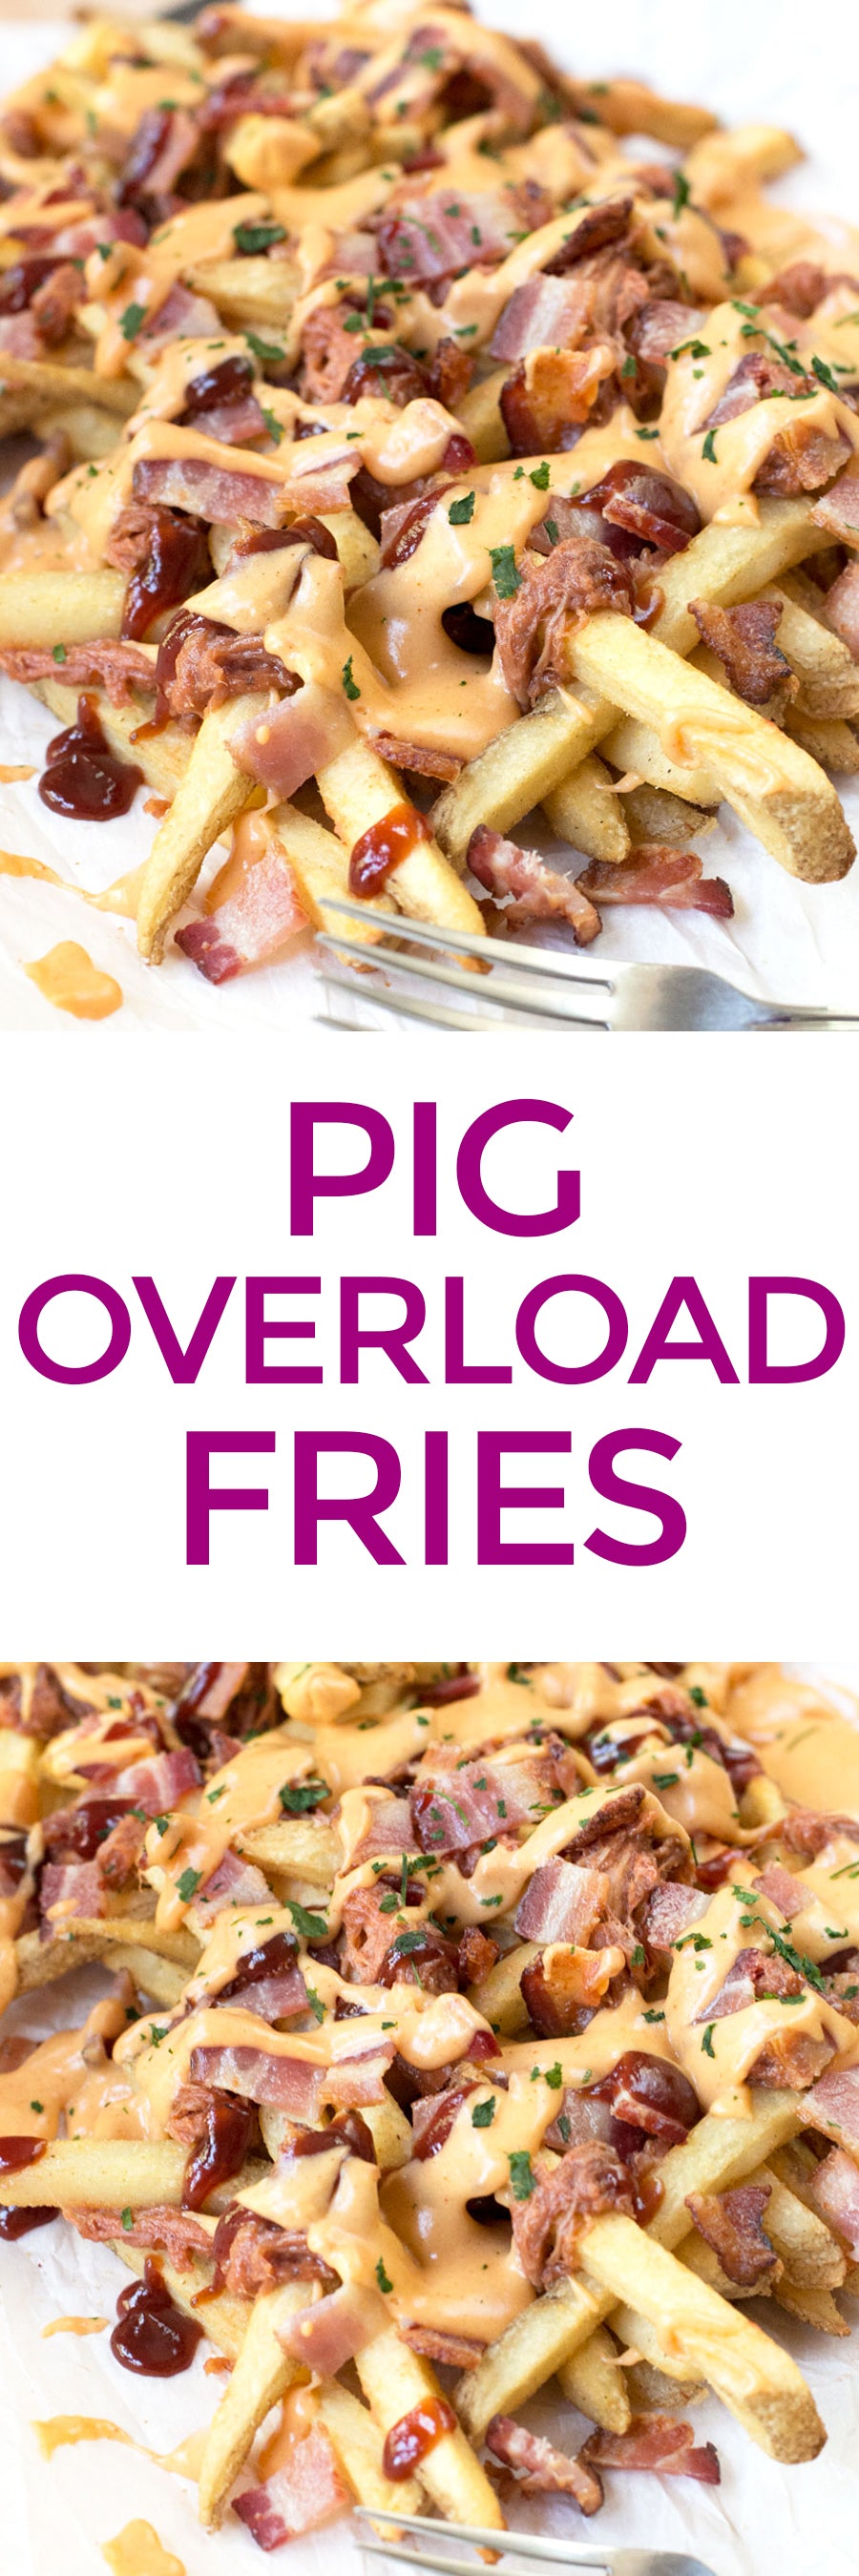 Pig Overload Fries | pigofthemonth.com #tailgating #pork #bacon #recipe